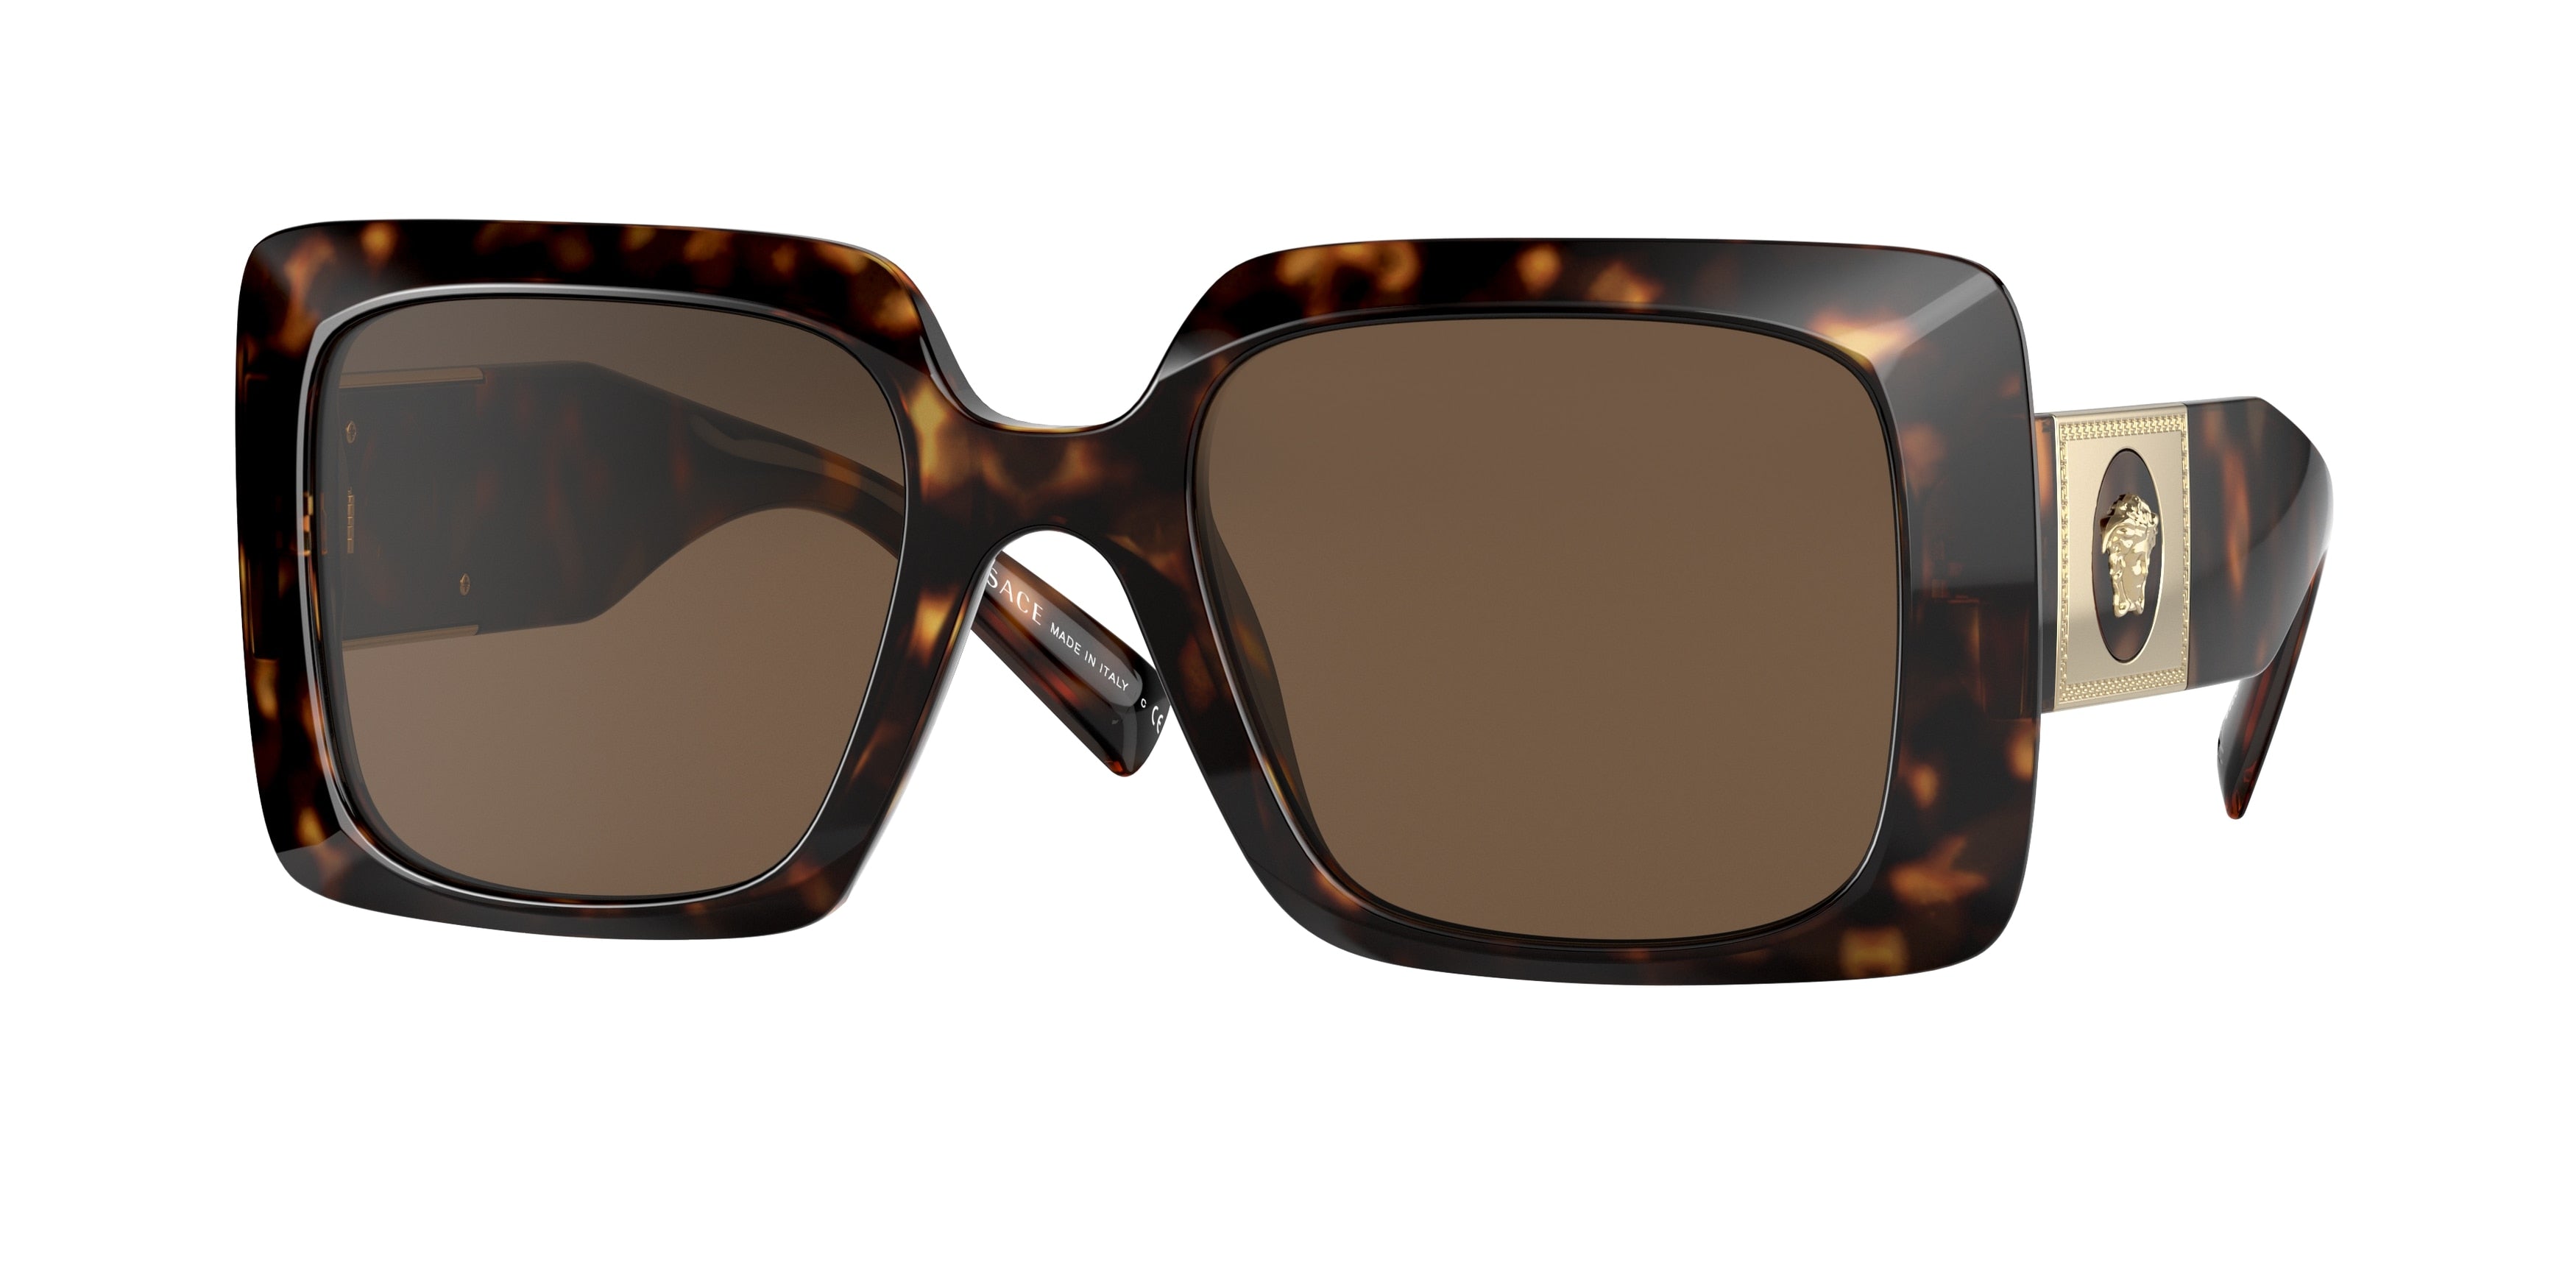 Versace VE4405 Rectangle Sunglasses  108/73-Havana 54-140-22 - Color Map Tortoise